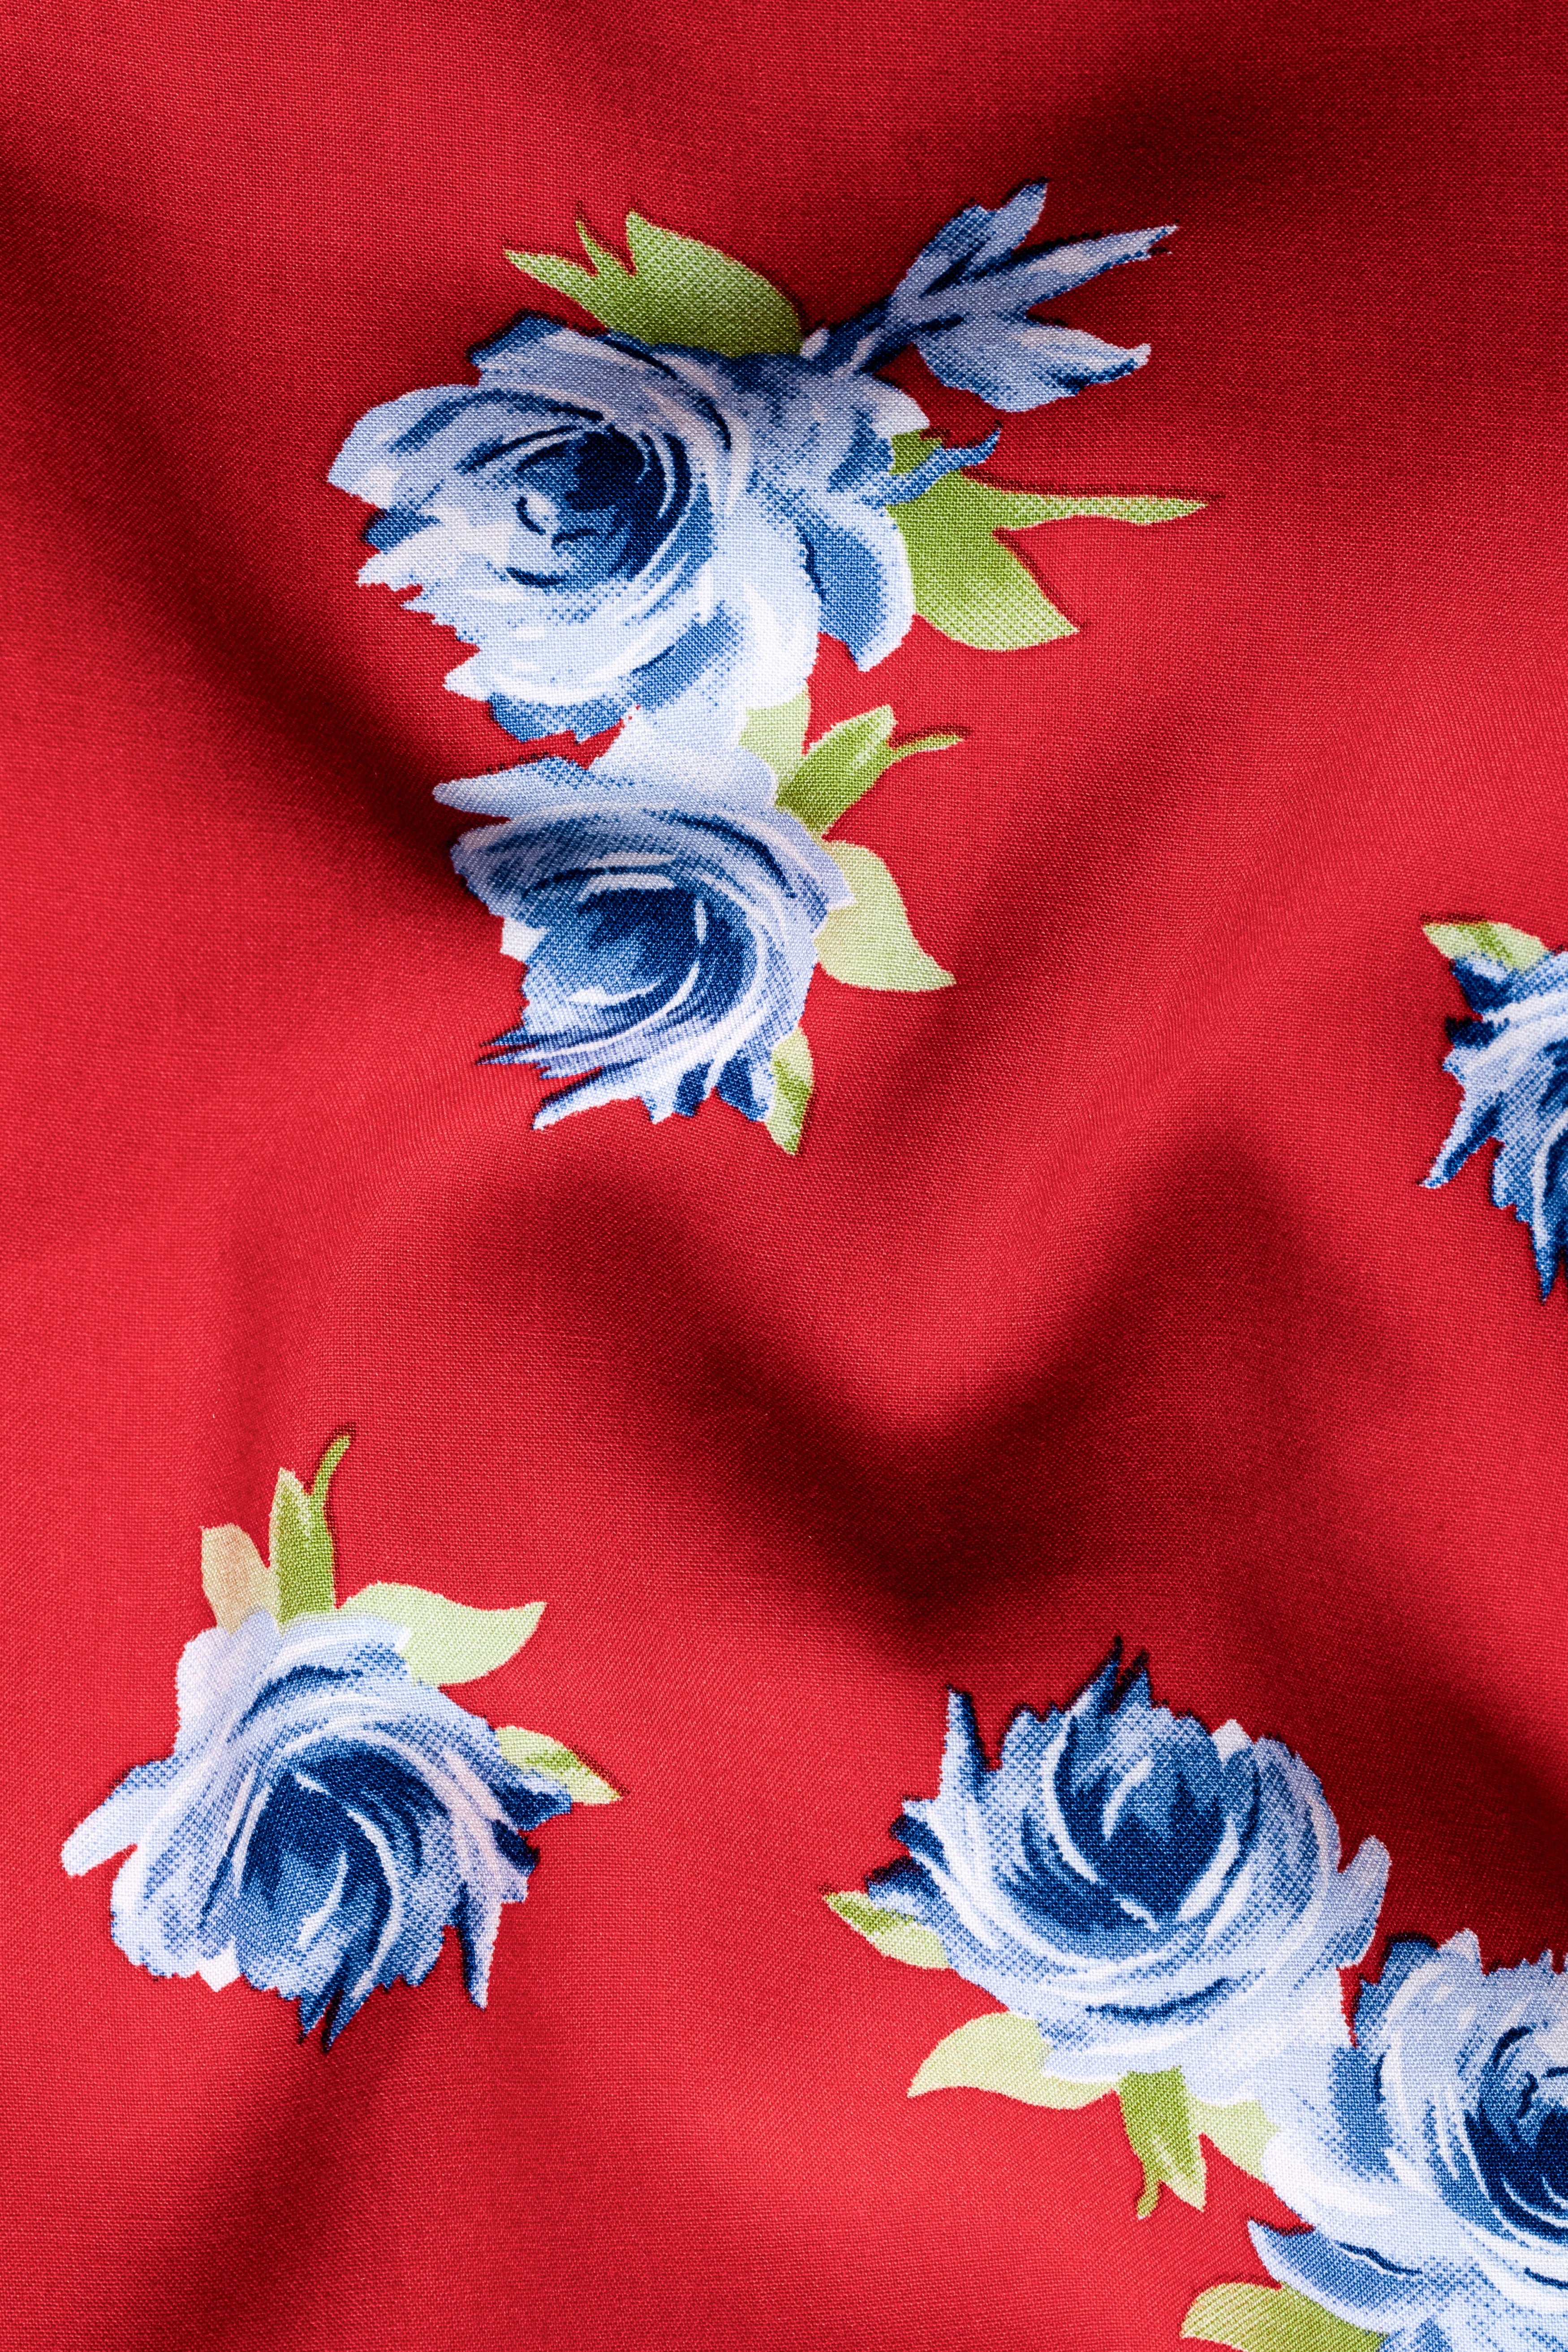 Scarlet Red and Cerulean Blue Floral Printed Premium Cotton Shorts SR382-28, SR382-30, SR382-32, SR382-34, SR382-36, SR382-38, SR382-40, SR382-42, SR382-44